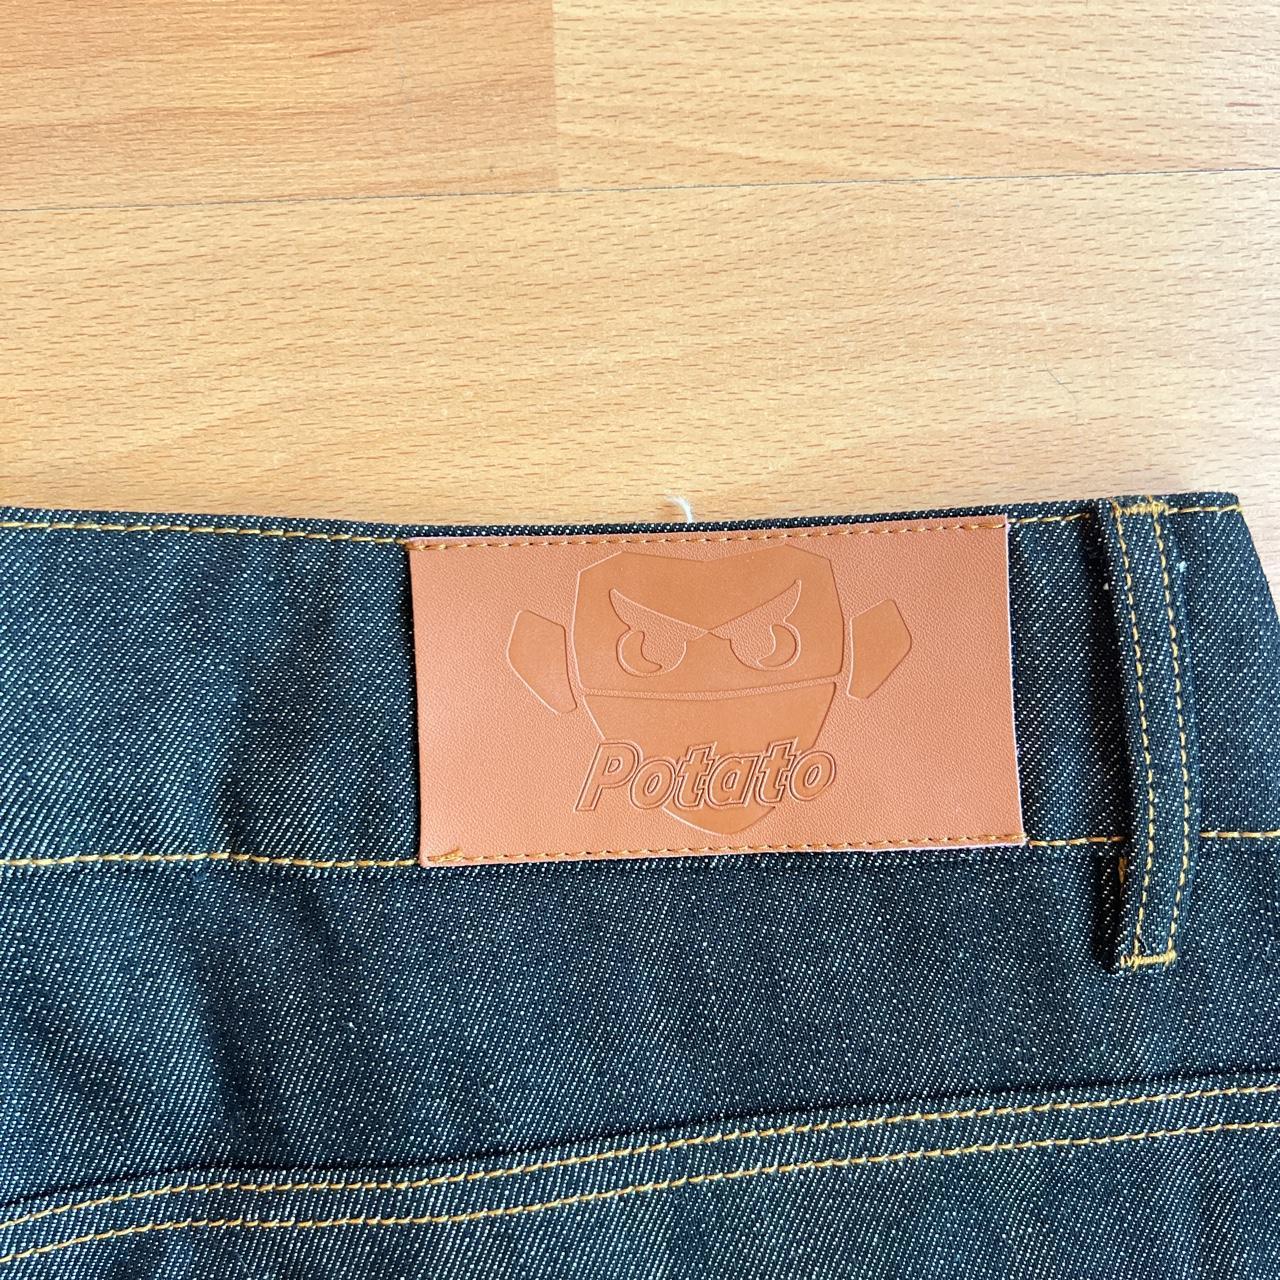 Imran Potato FW ‘21 Poy Poy Jeans, New (Tried on too